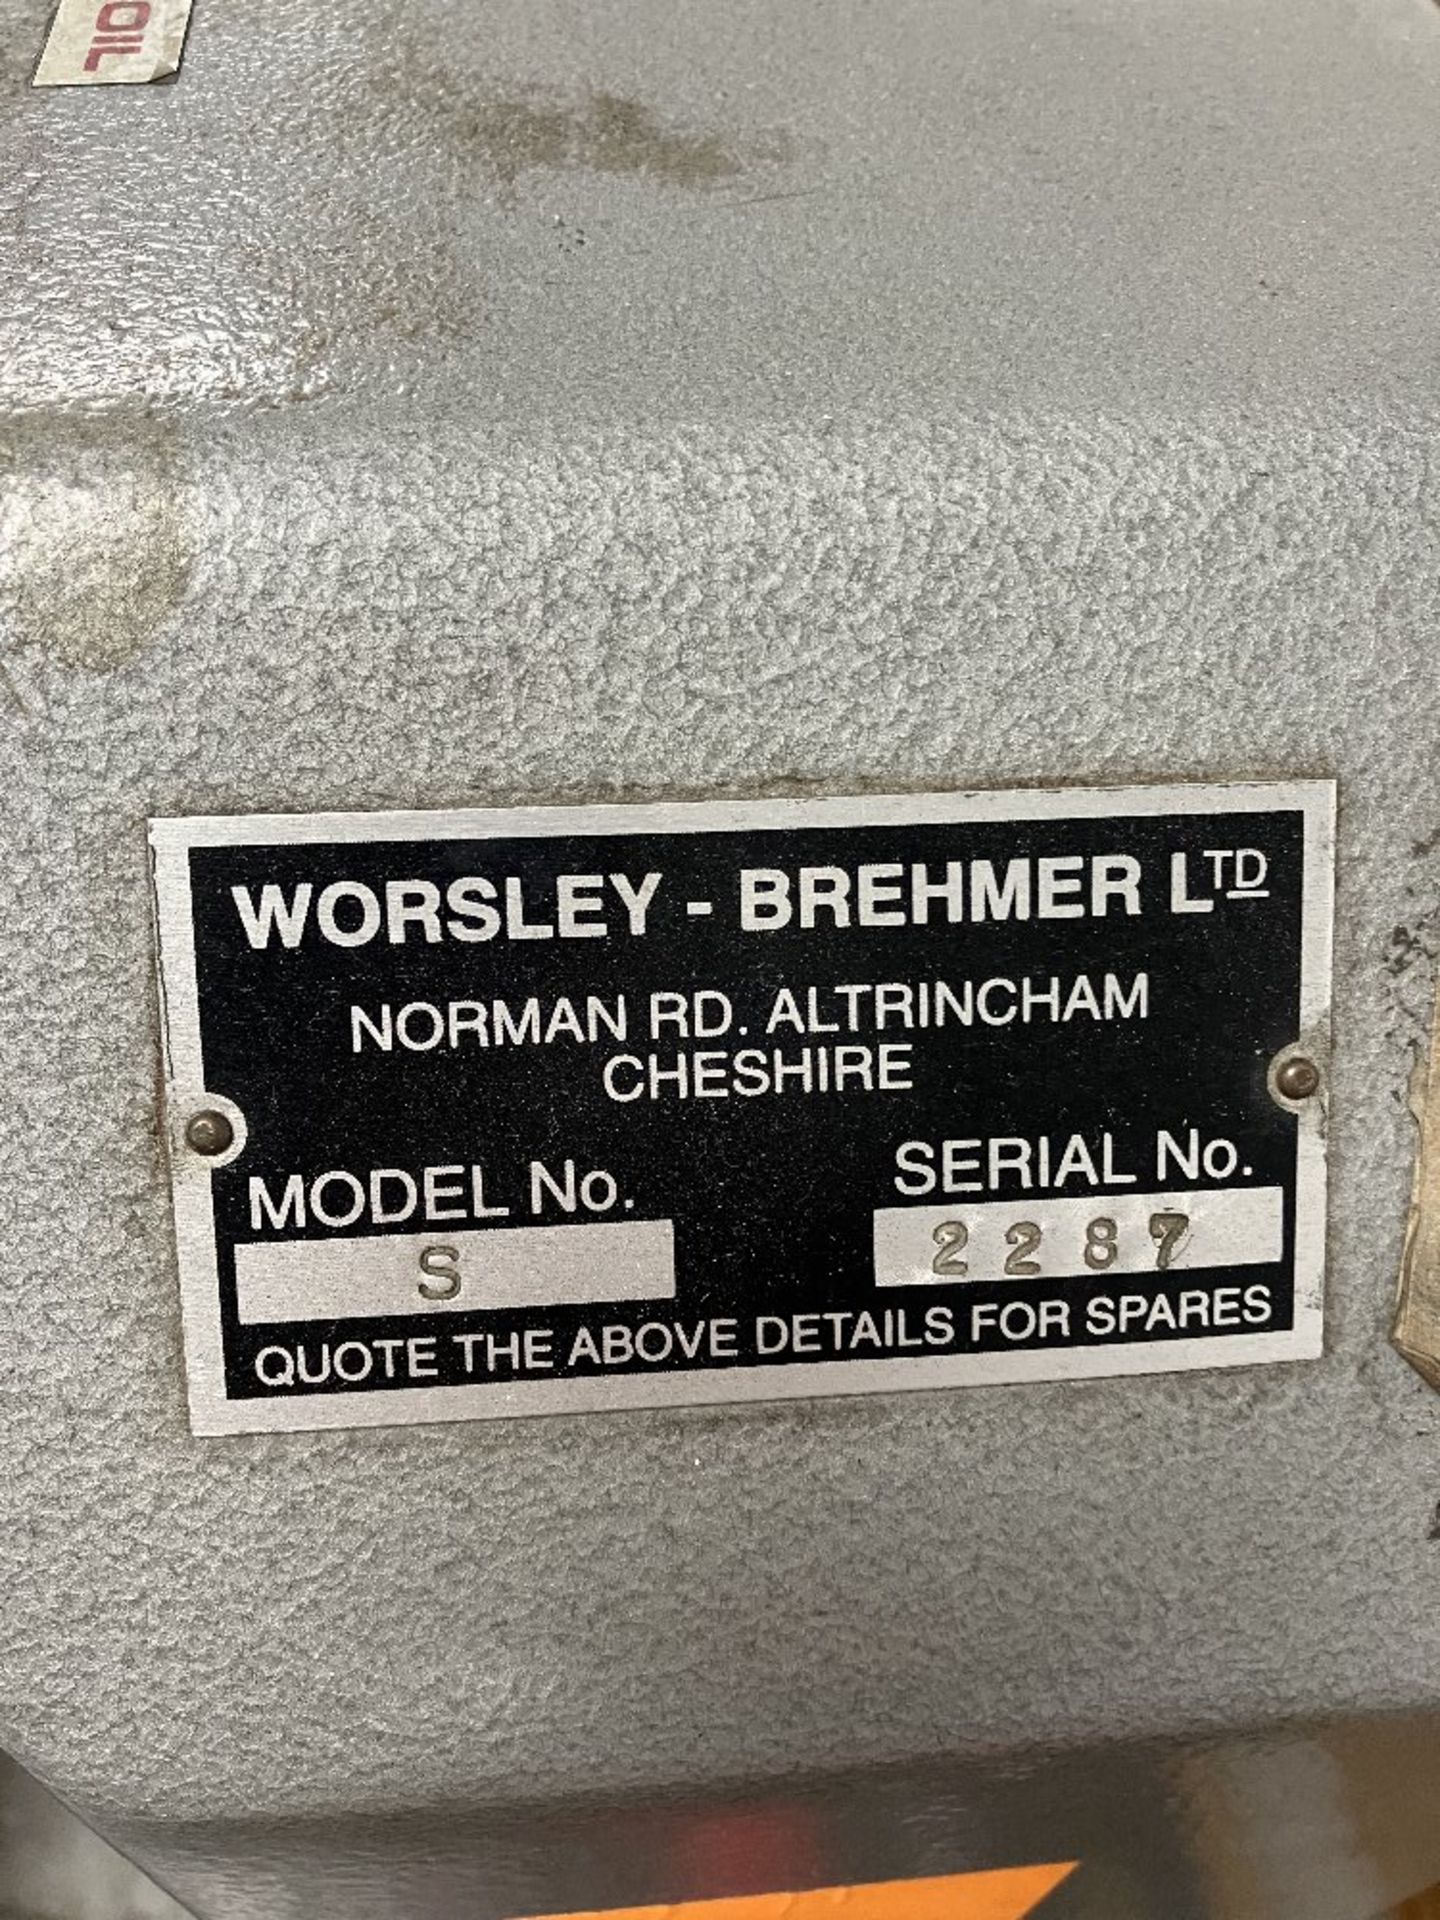 Worsley Brehmer Model S Stitcher Machine - Image 3 of 4